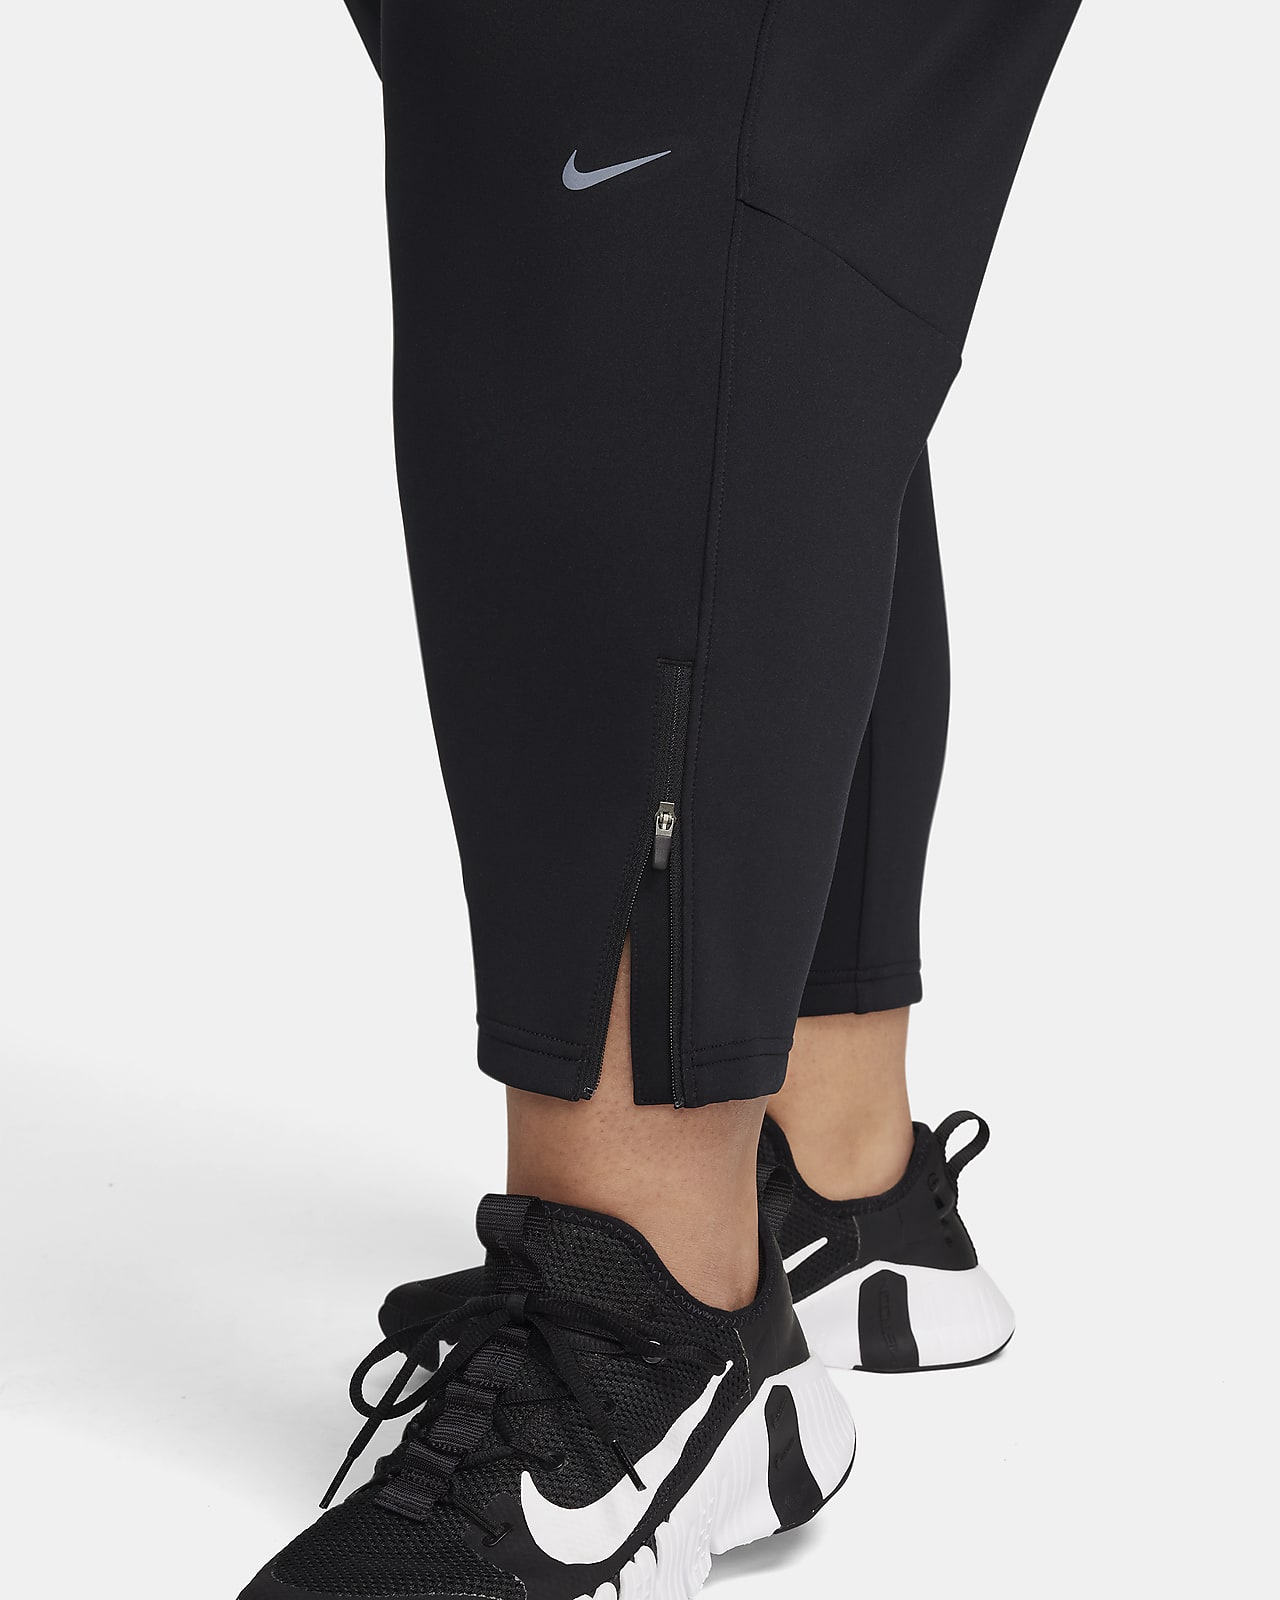 Nike dri fit gym pants 3/4 length sportswear all - Depop